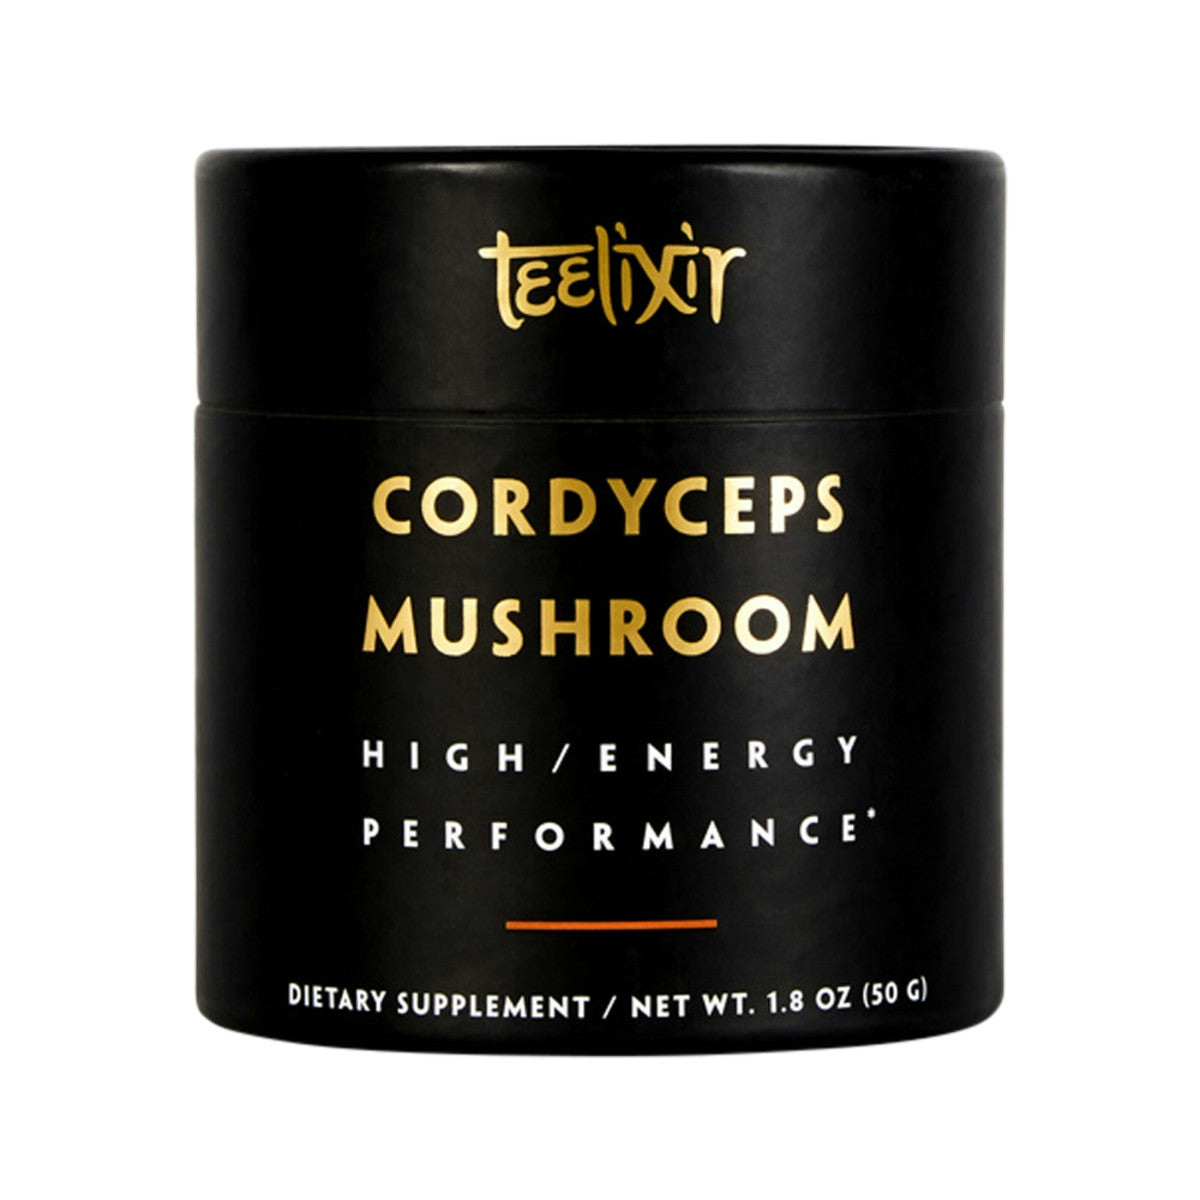 image of Teelixir Organic Cordyceps Mushroom (High/Energy Performance) 50g on white background